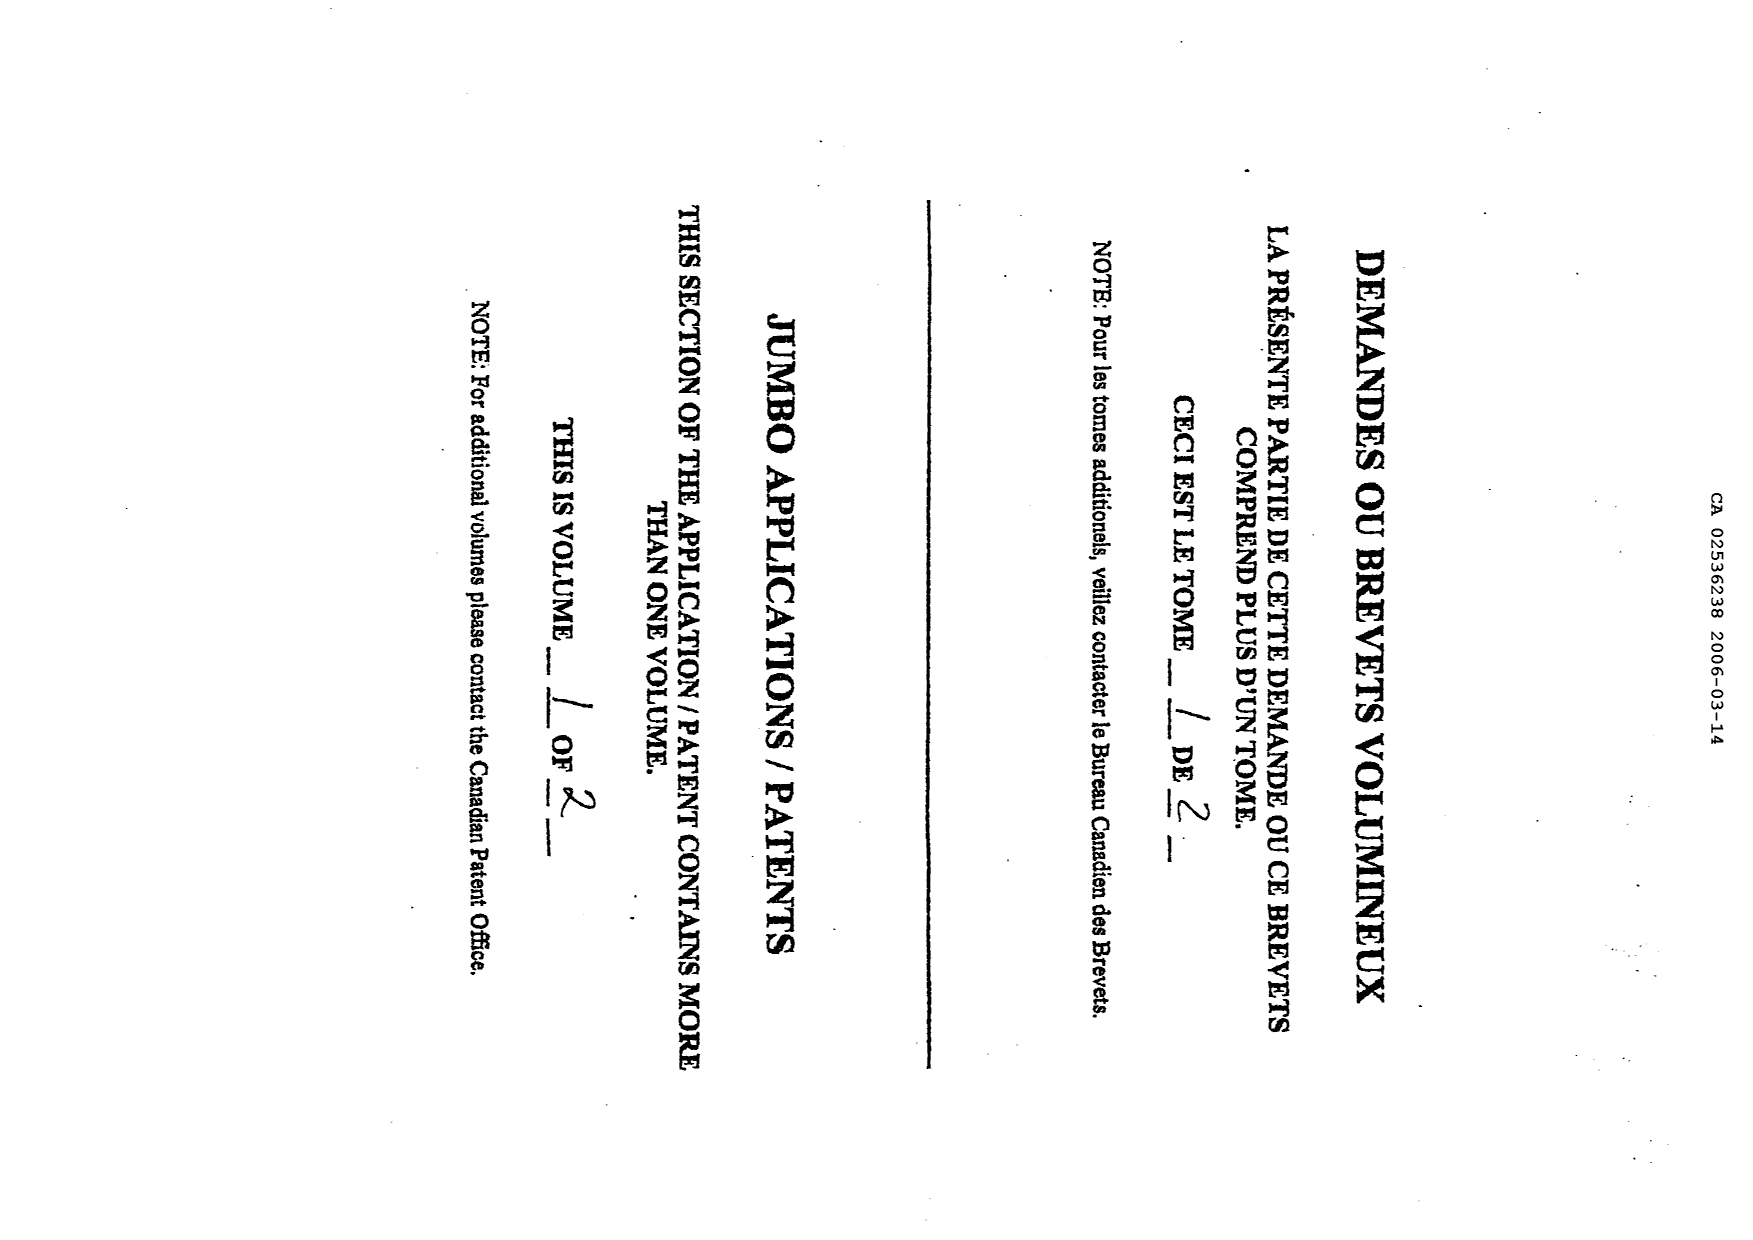 Canadian Patent Document 2536238. Prosecution-Amendment 20060314. Image 1 of 250